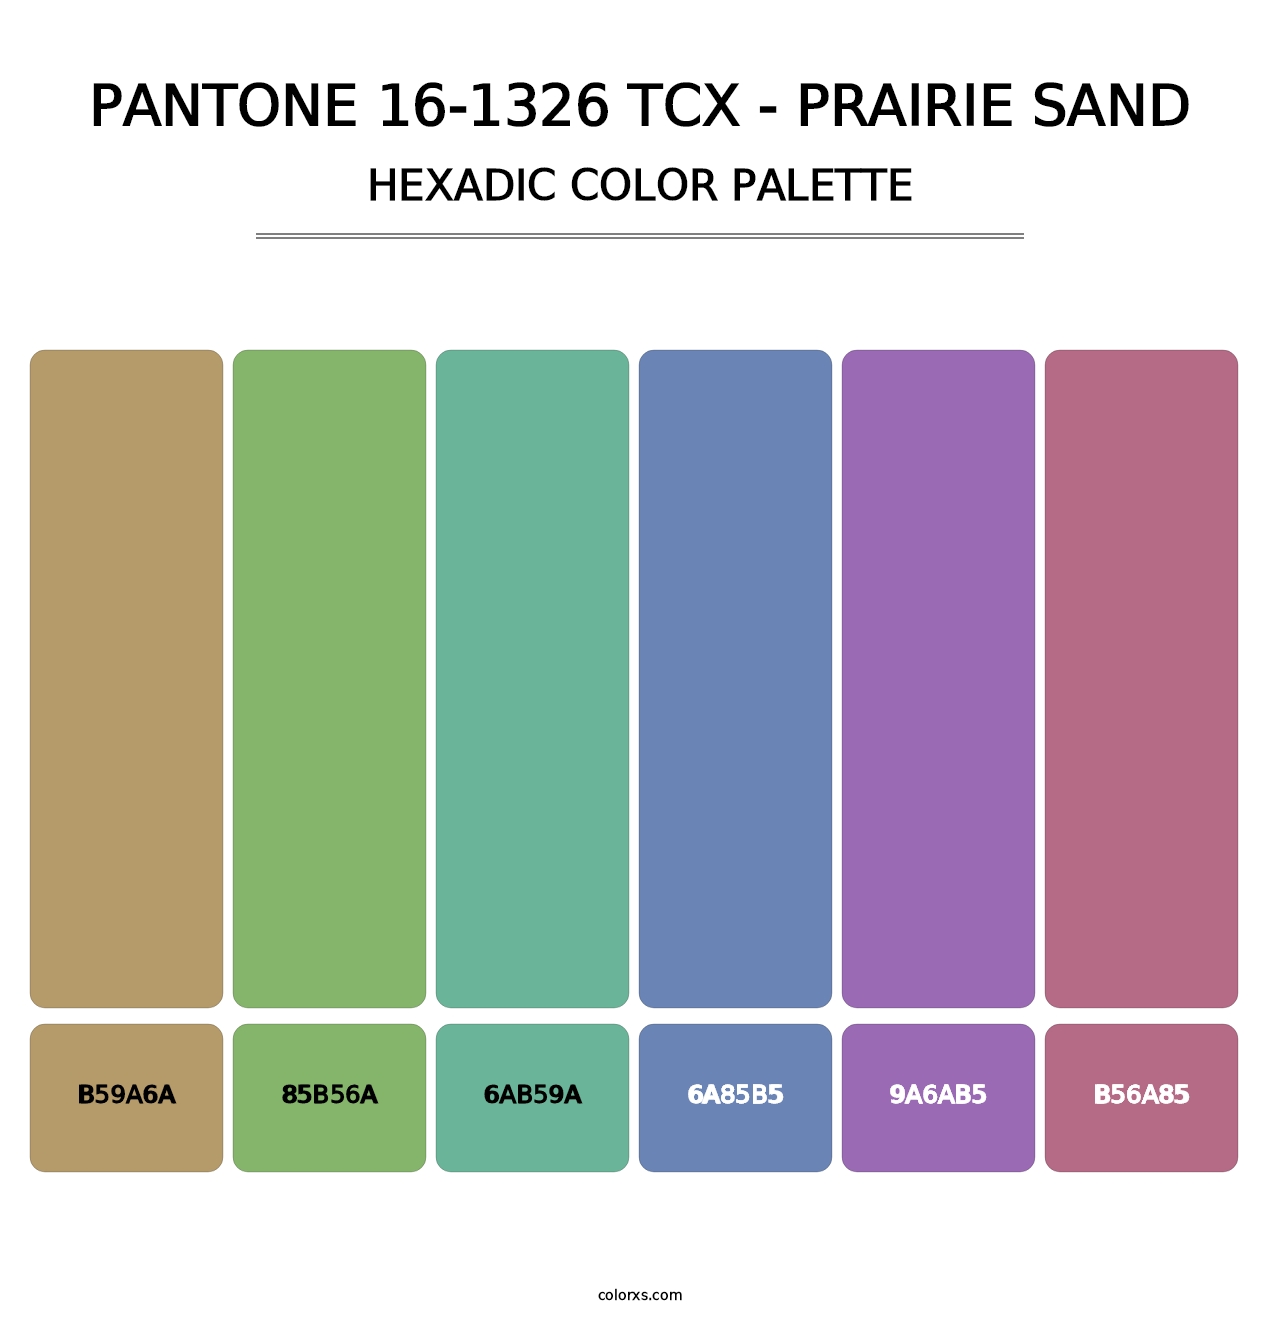 PANTONE 16-1326 TCX - Prairie Sand - Hexadic Color Palette